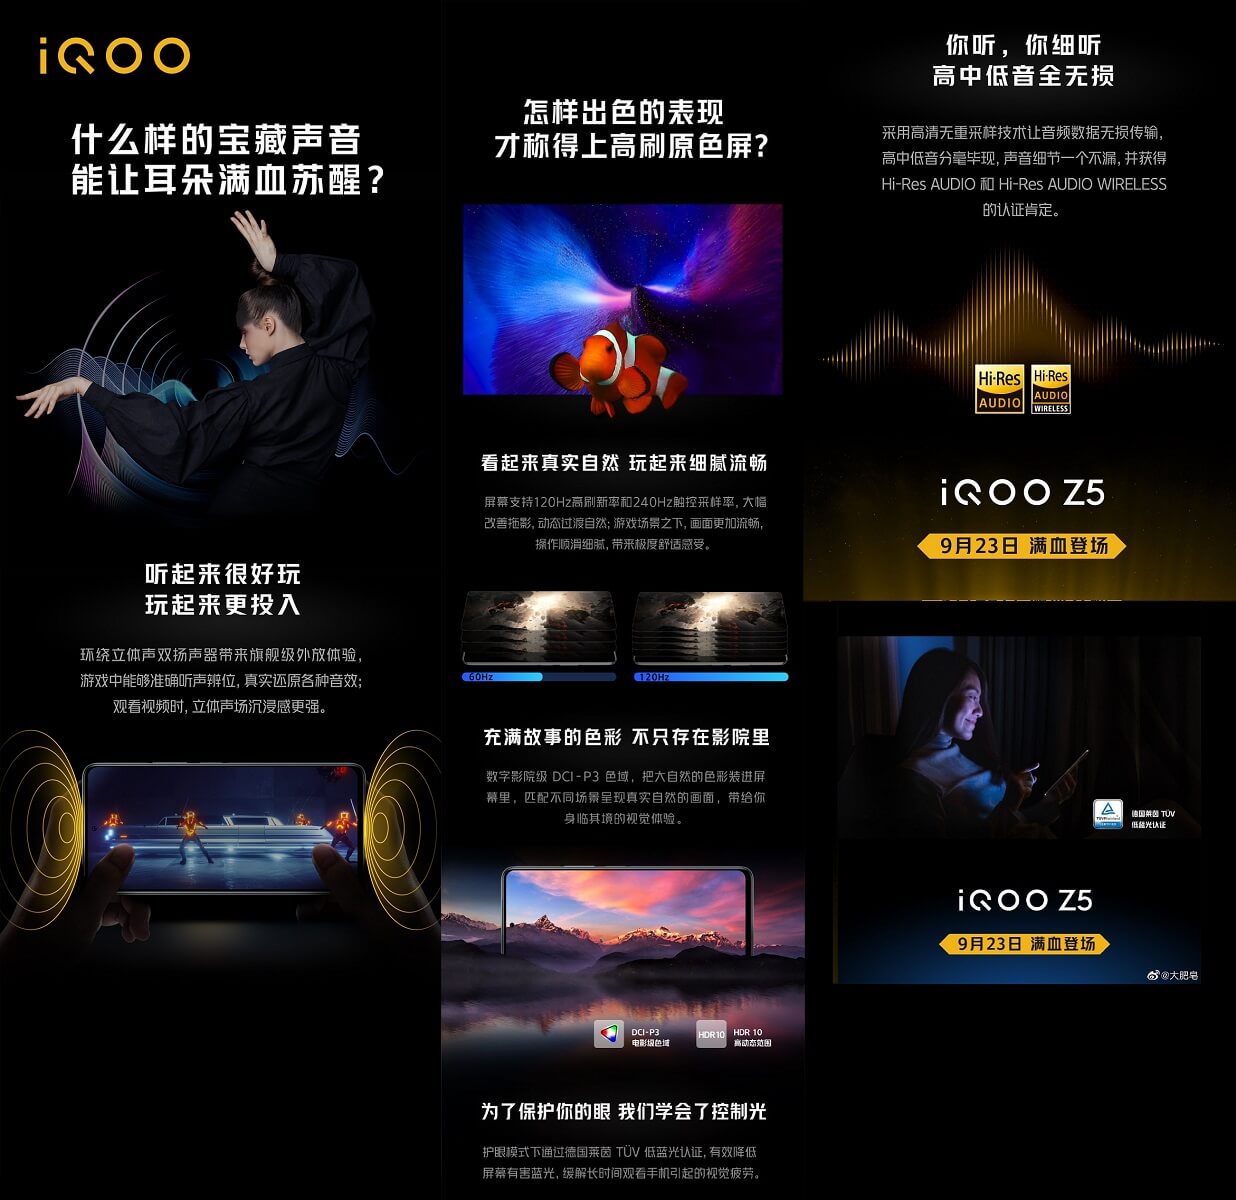 iQOO Z5 features